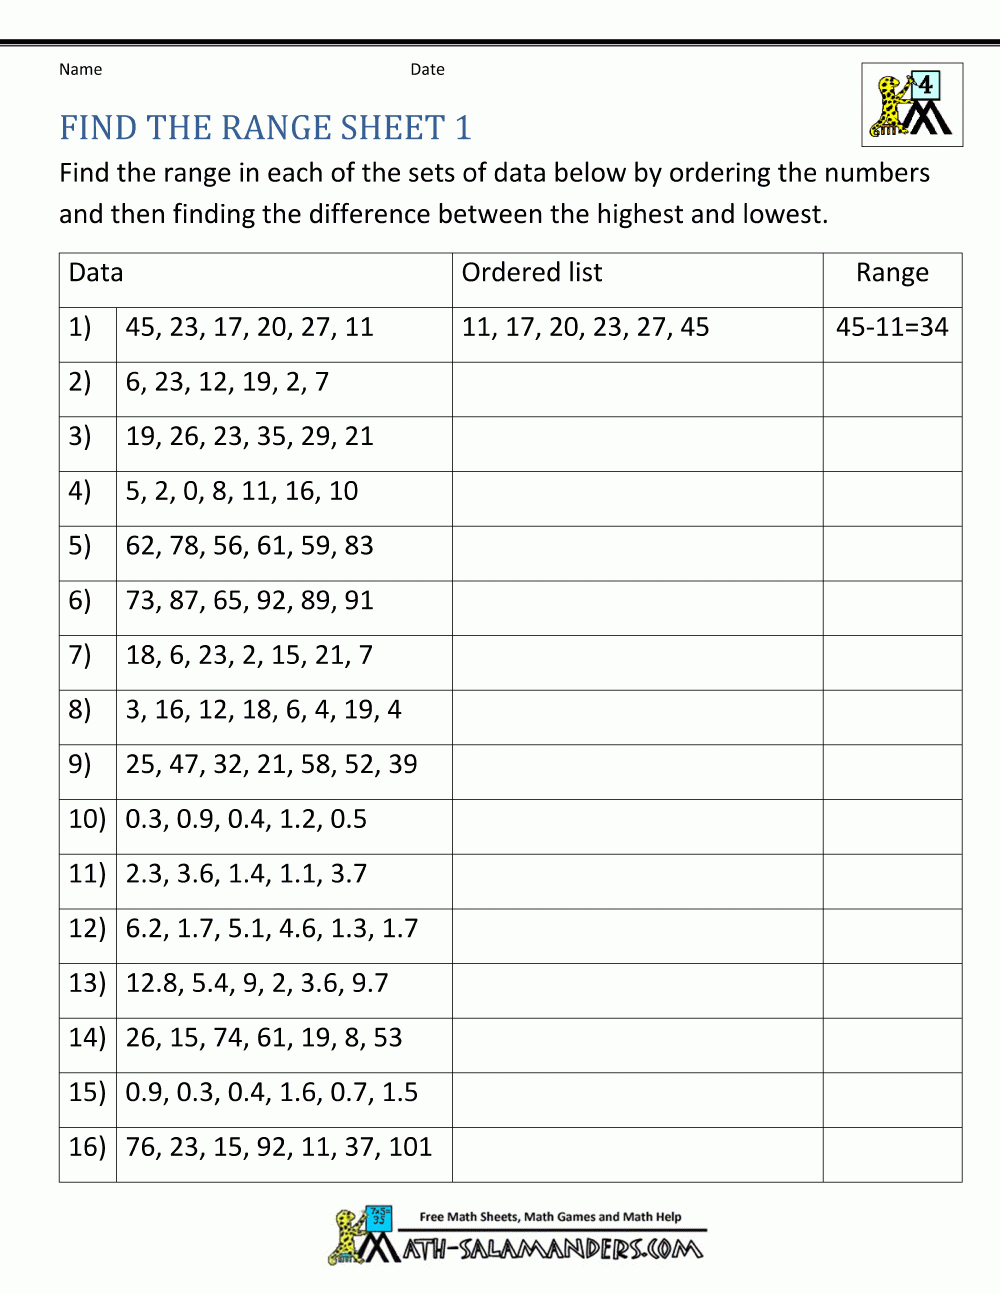 Mode And Range Worksheets - Free Printable Data Sheets